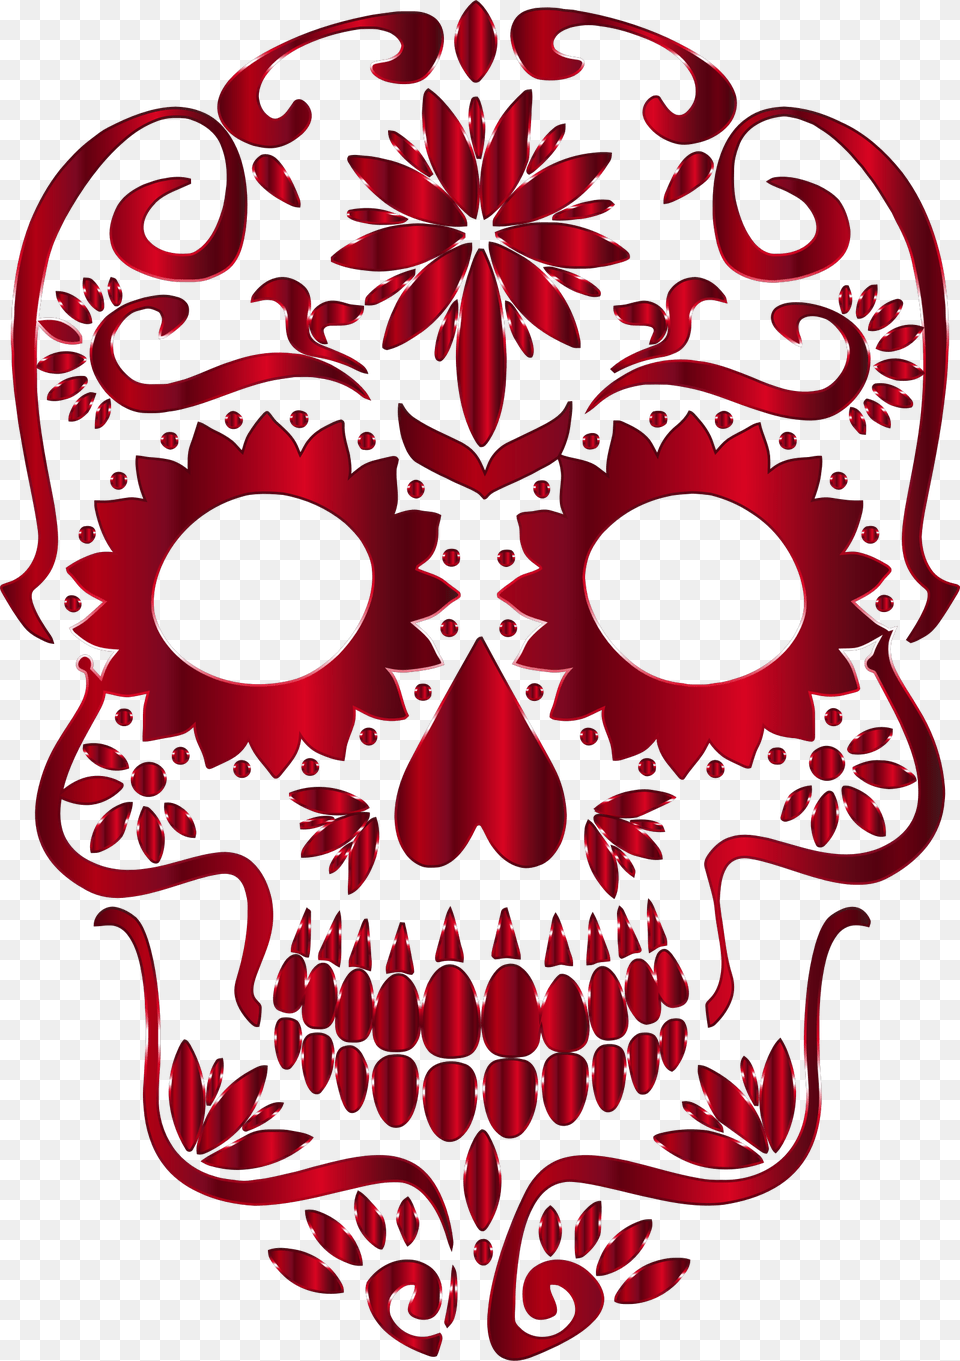 Transparent Skeliton Clipart Sugar Skull Free Clip Art, Mask, Person Png Image